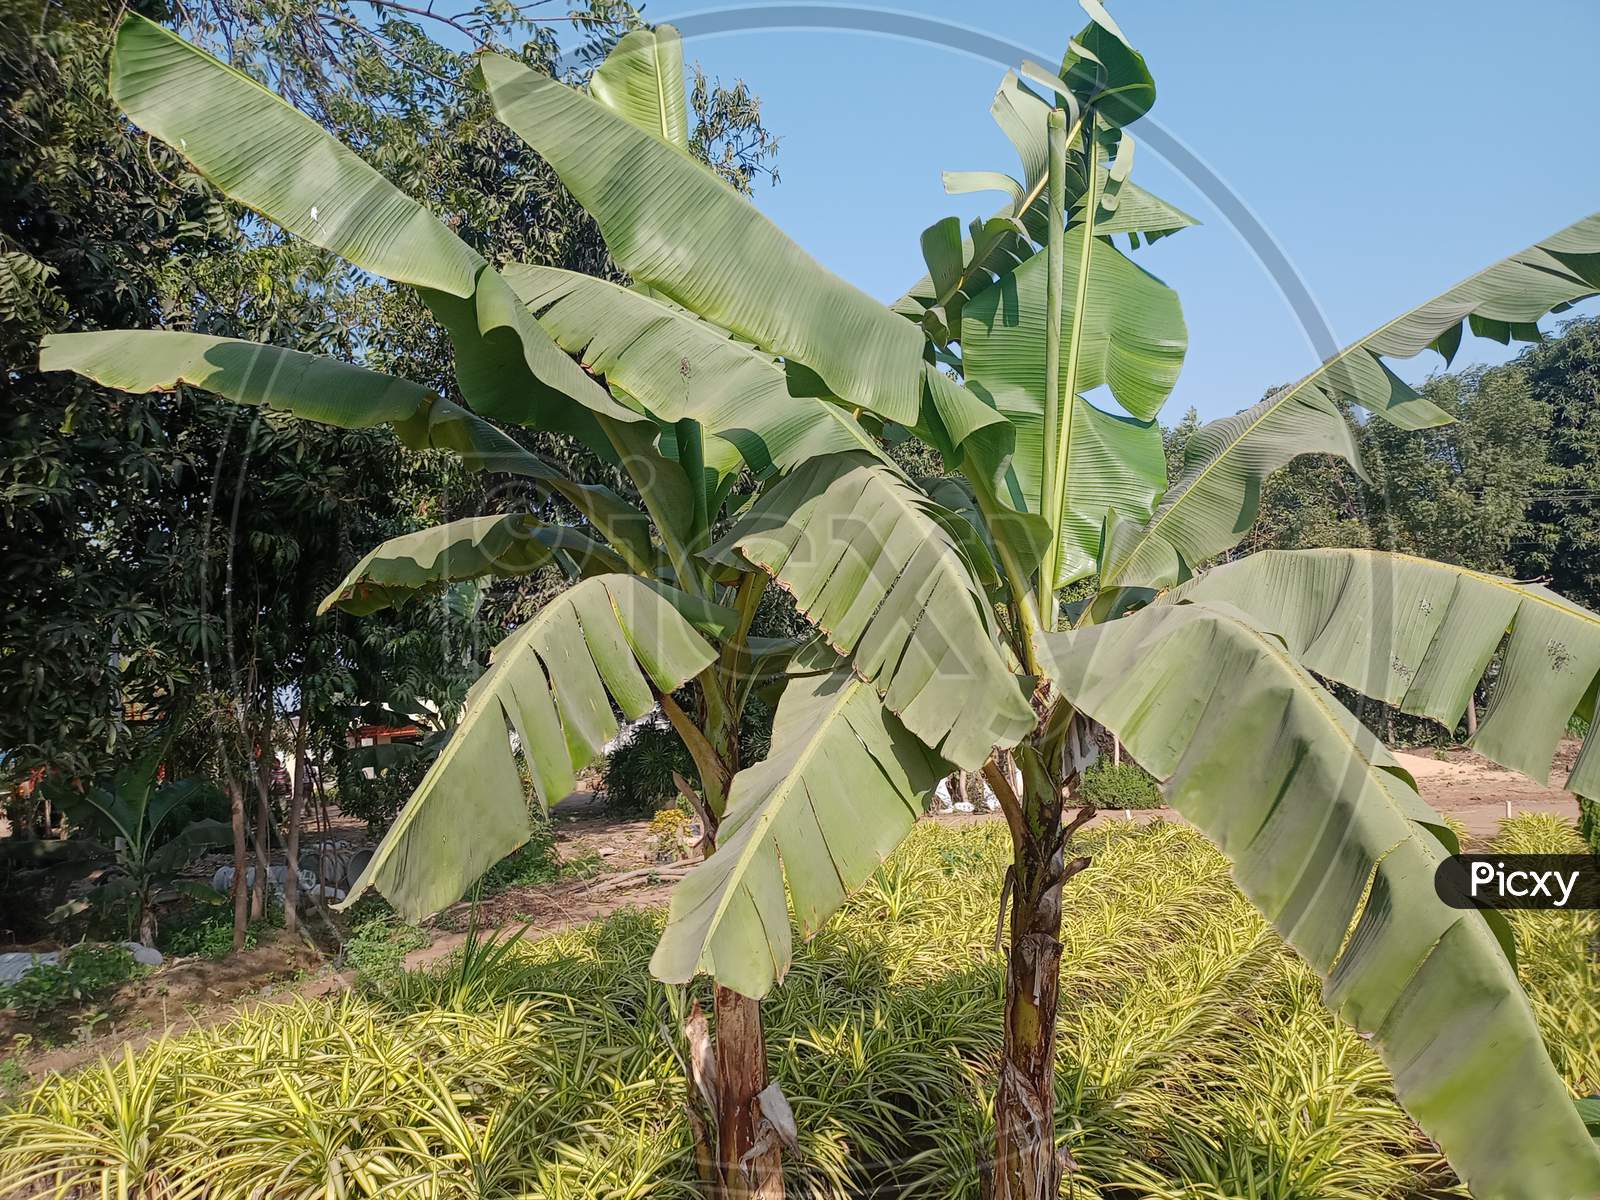 Banana seedlings Anand Guj